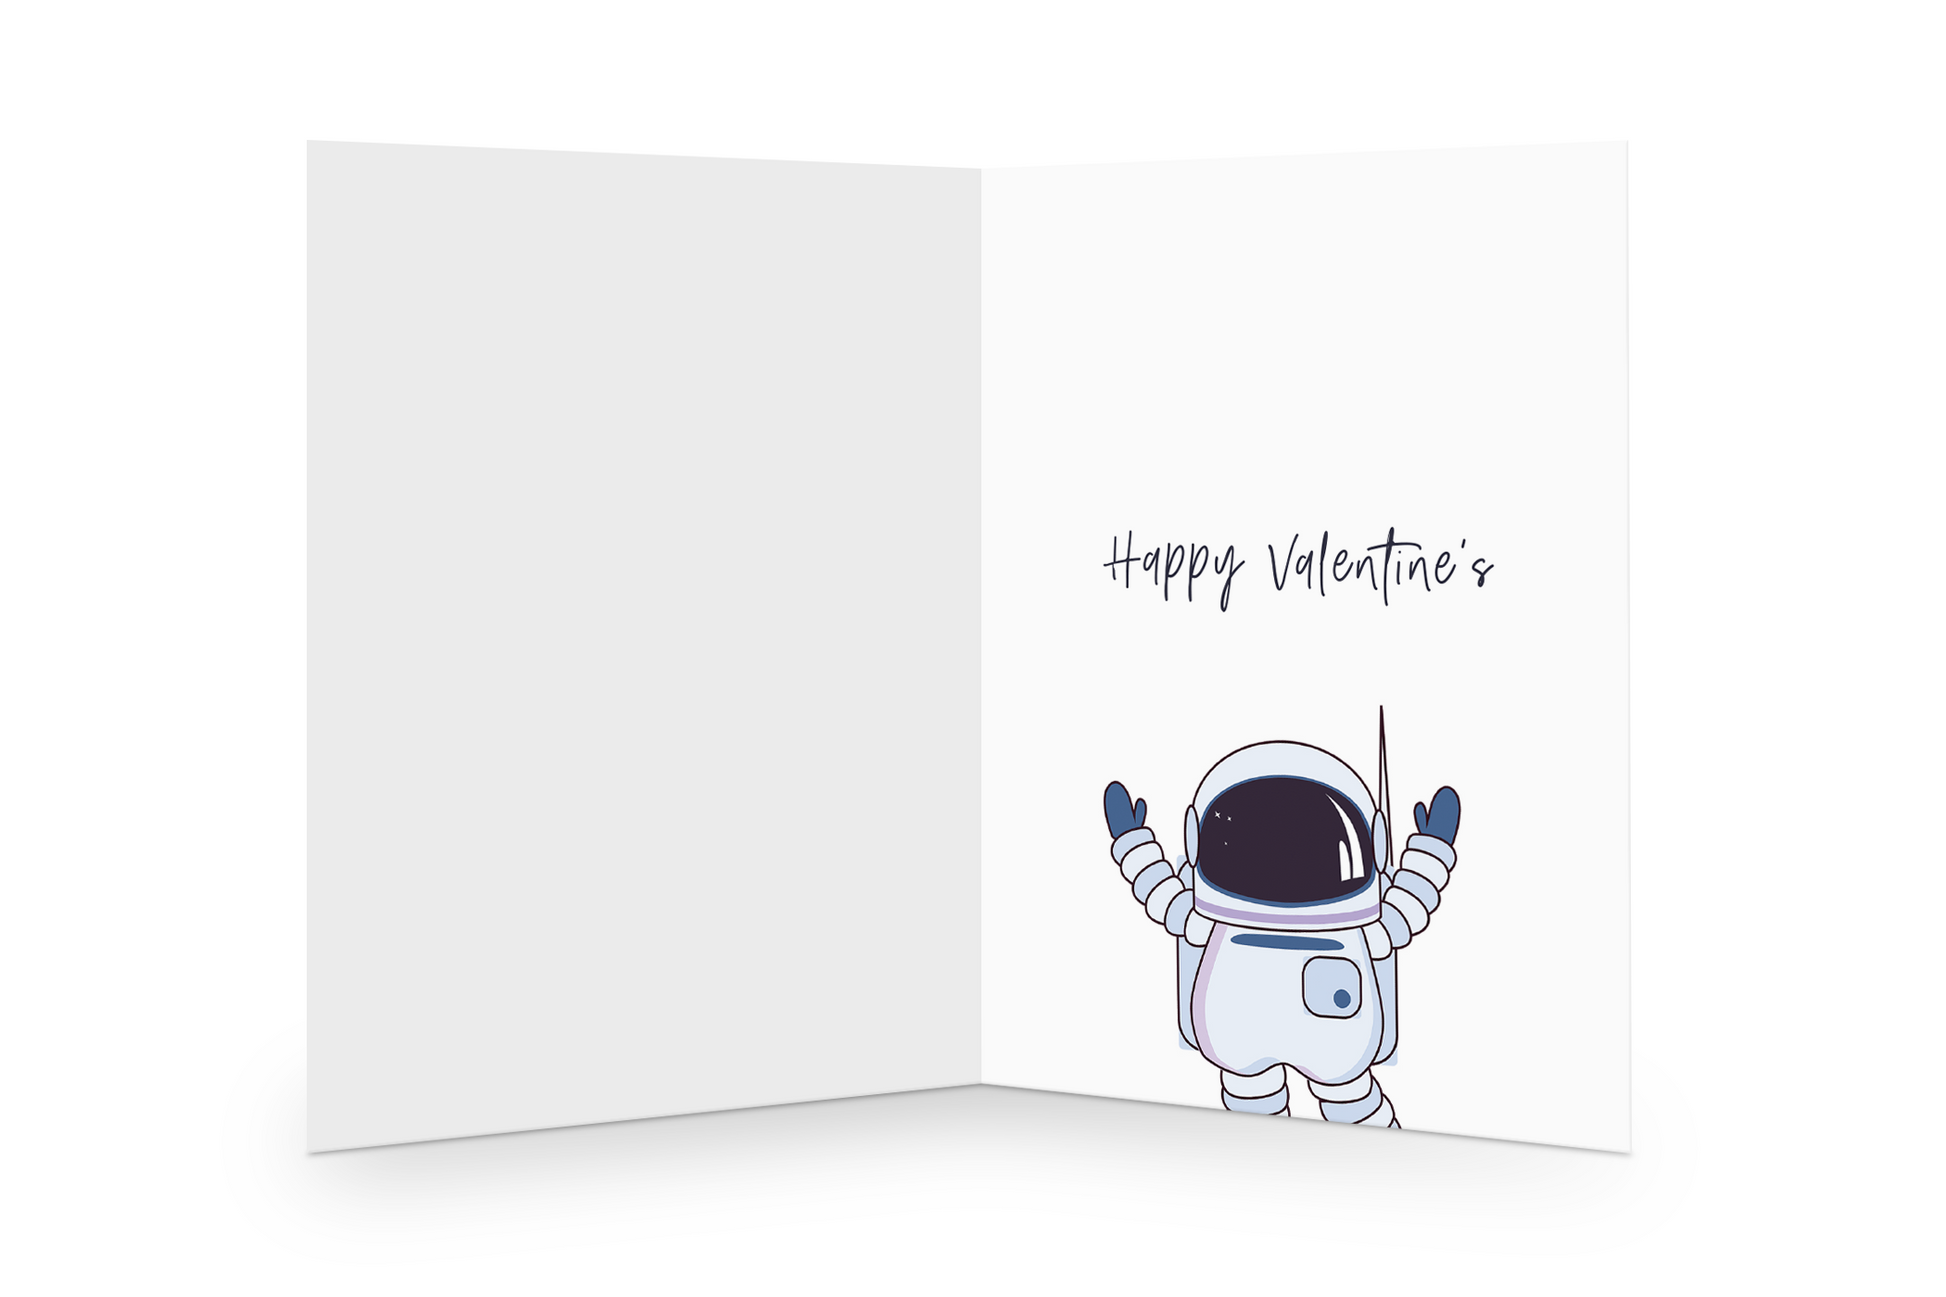 Happy Valentine's inside greeting card